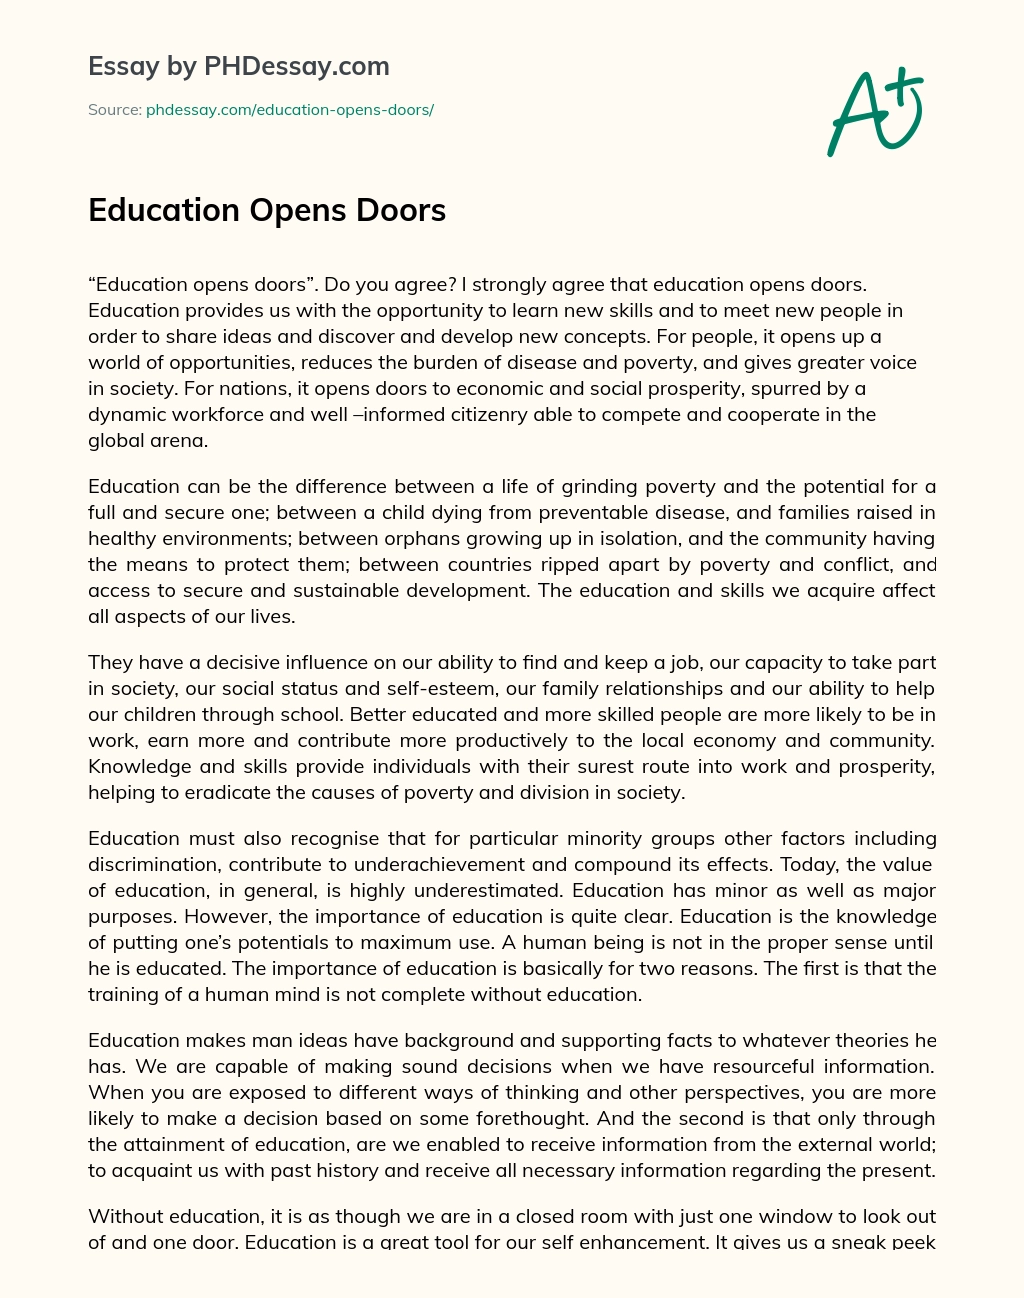 Education Opens Doors essay